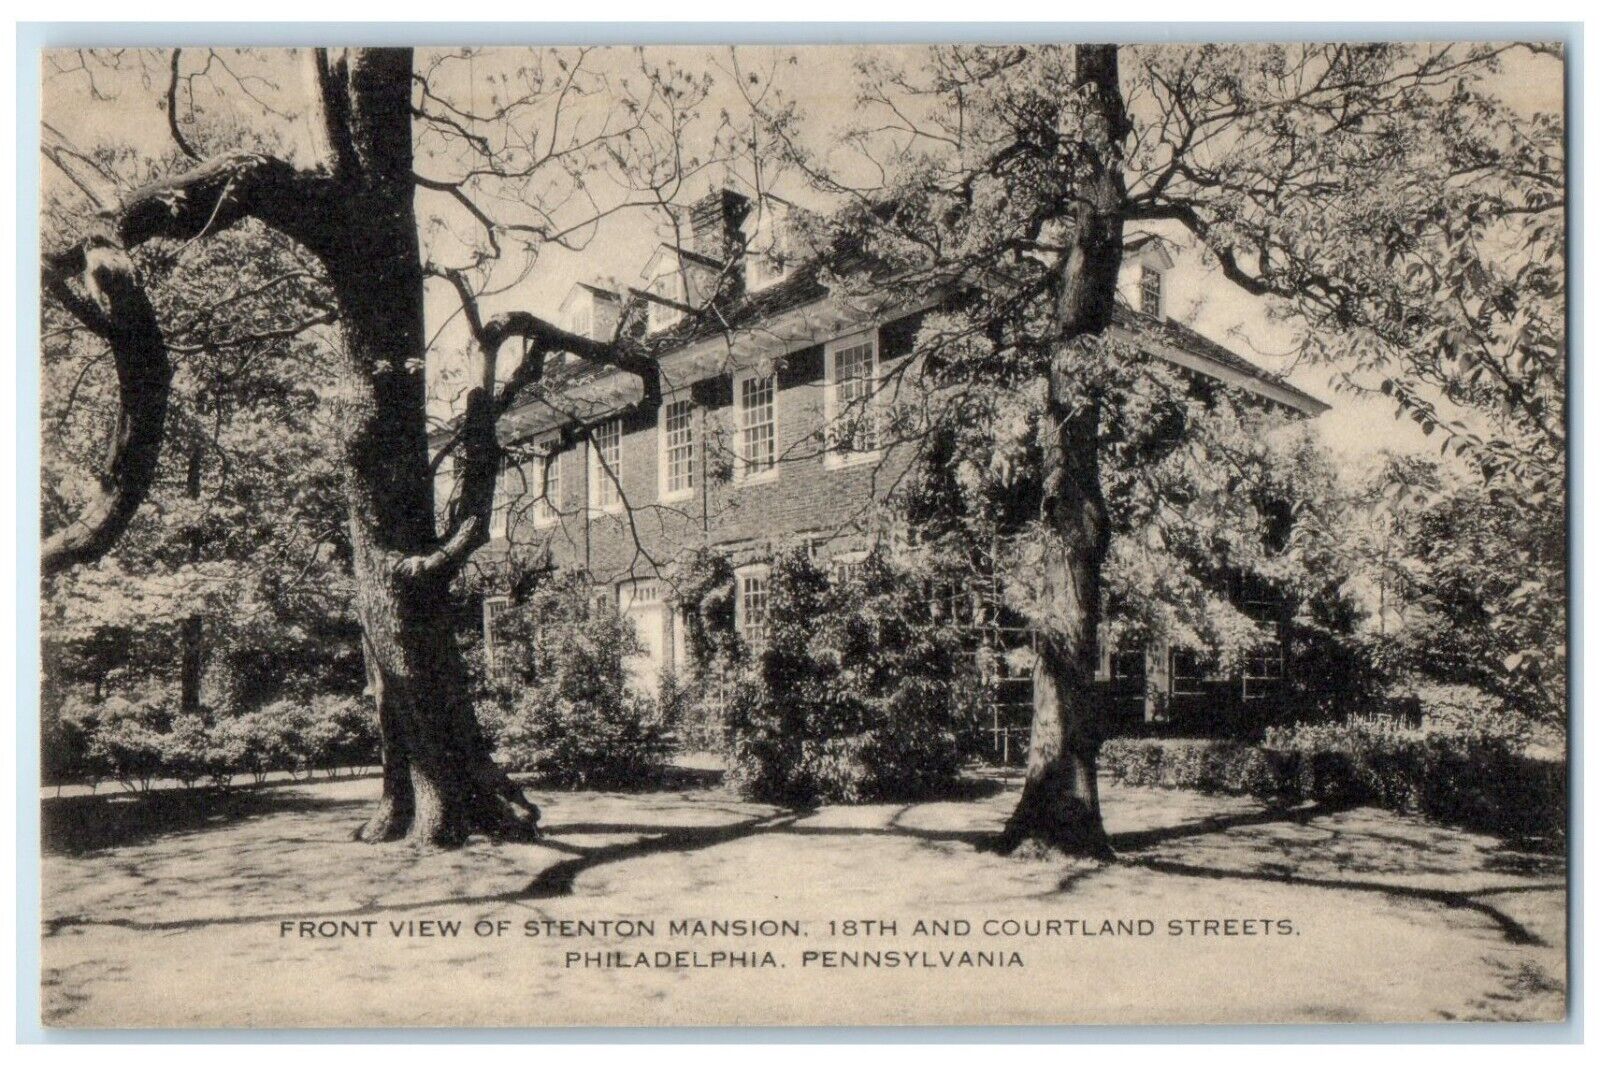 c1940 Front View Stenton Mansion Courtland Streets Philadelphia Artvue Postcard